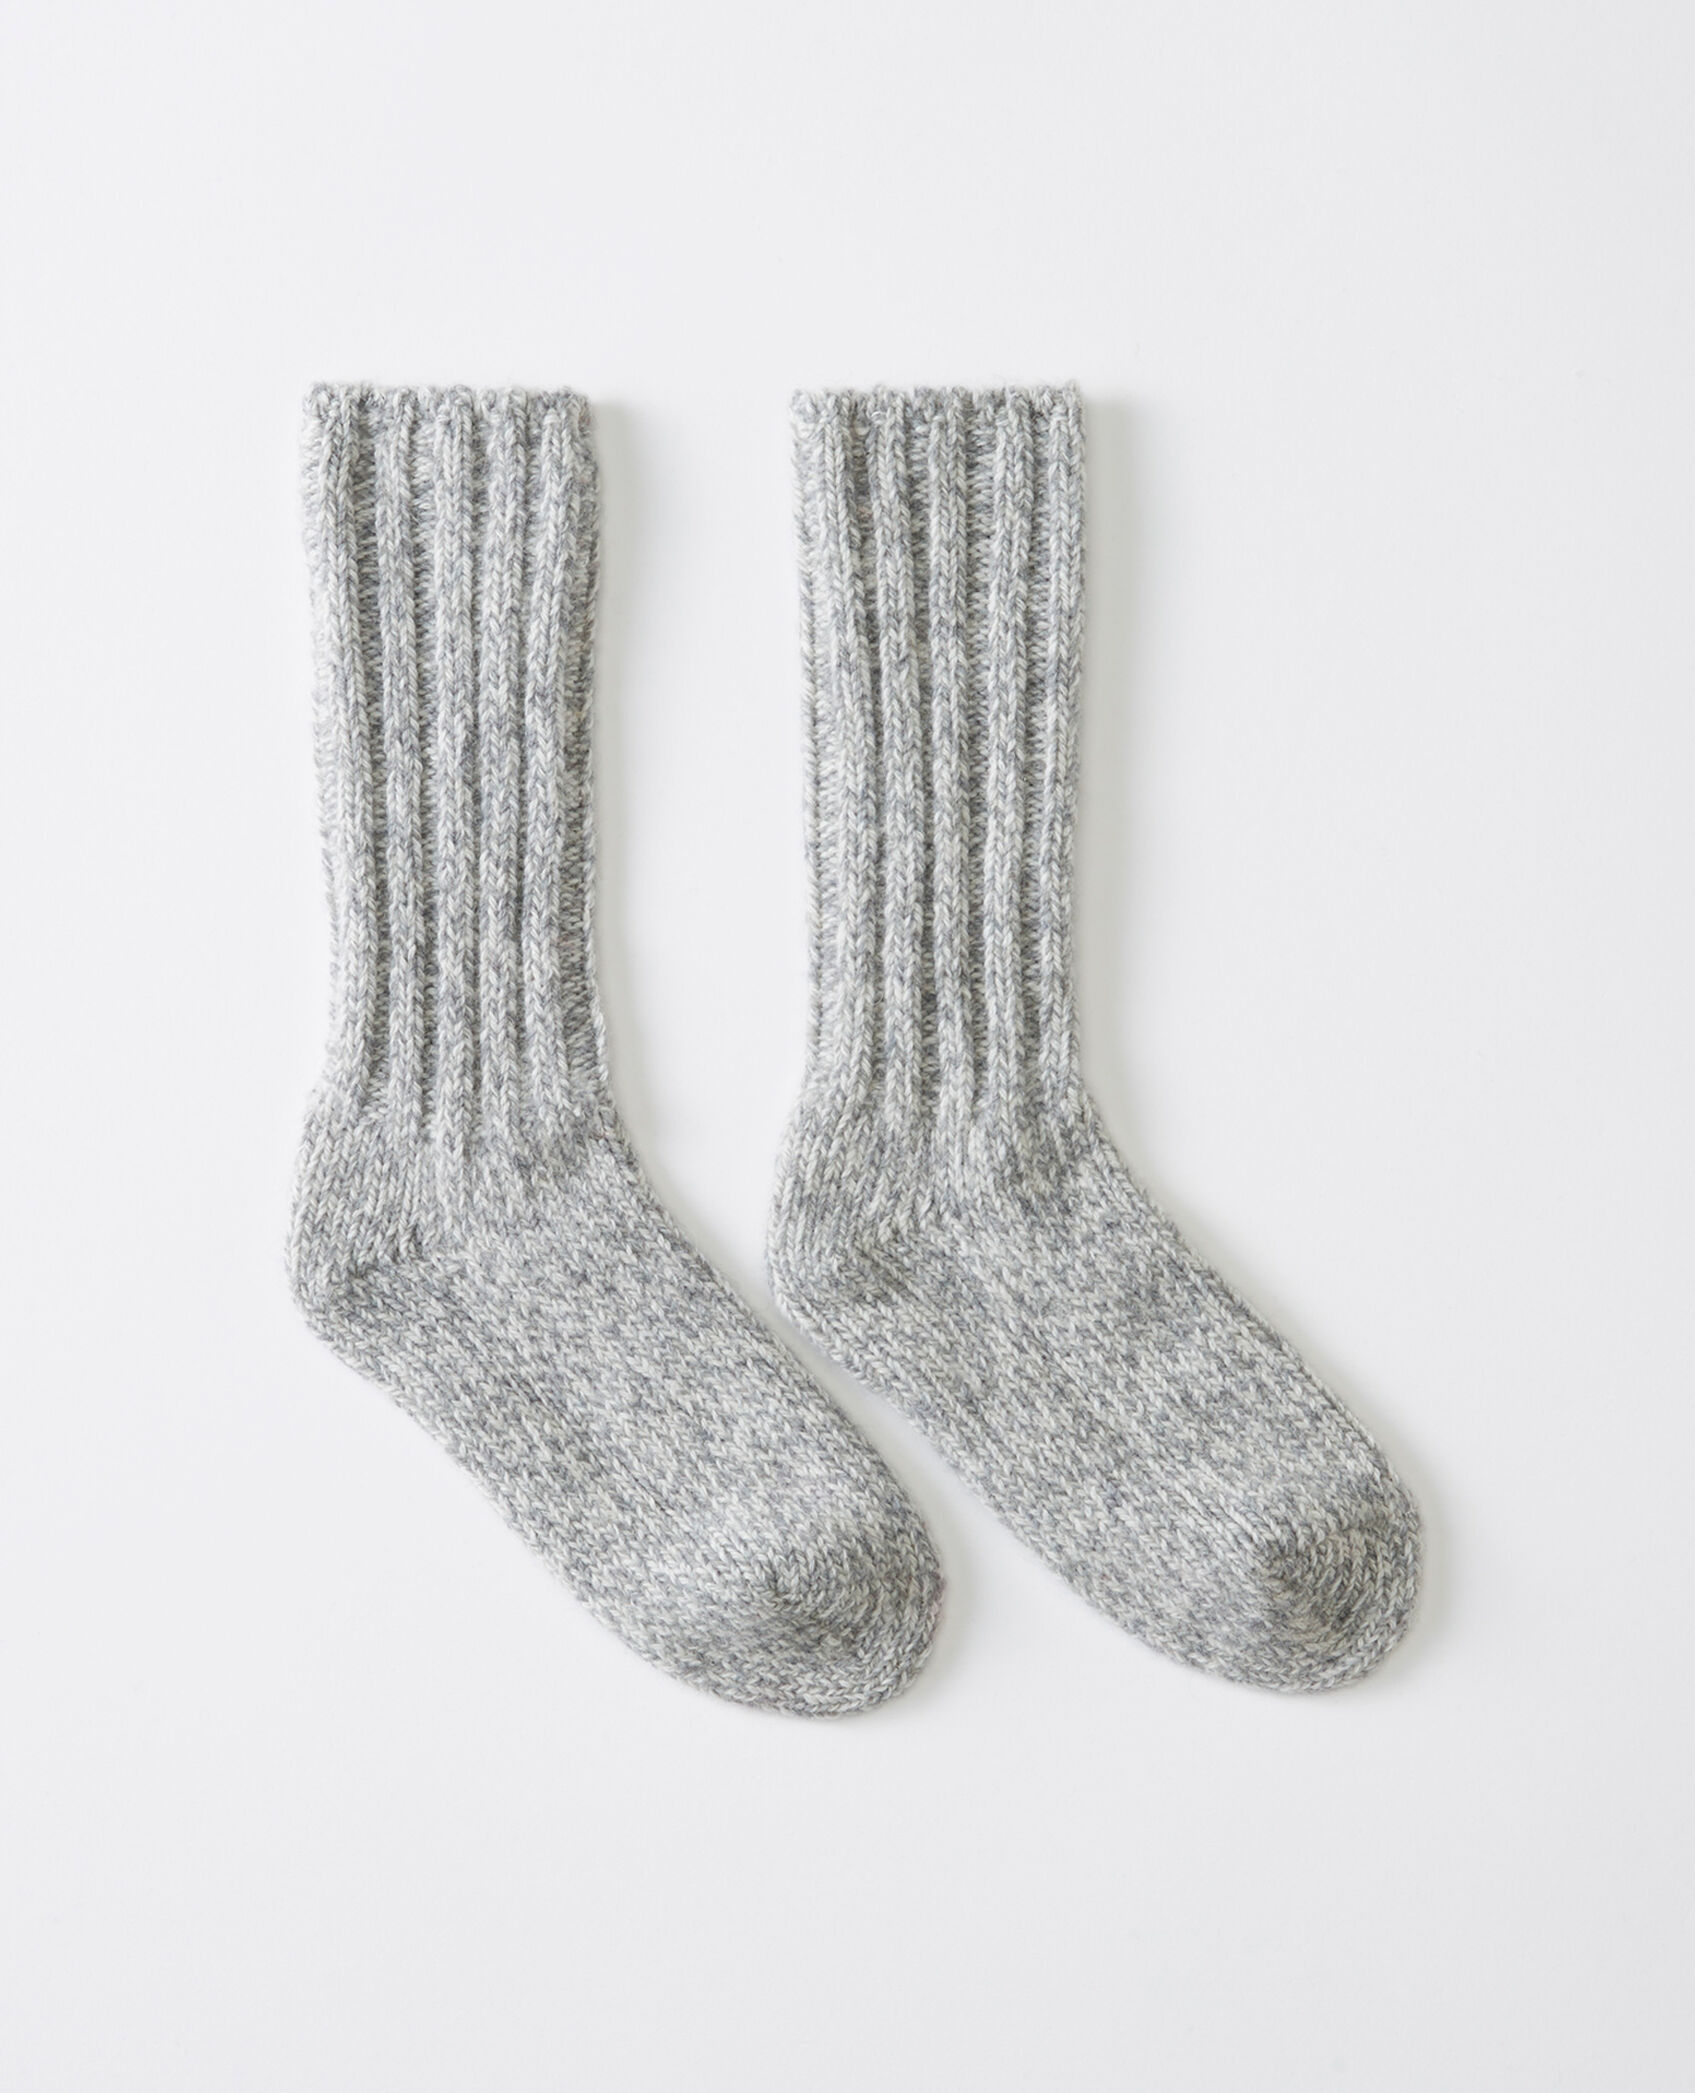 Cozy Woolly Camp Socks